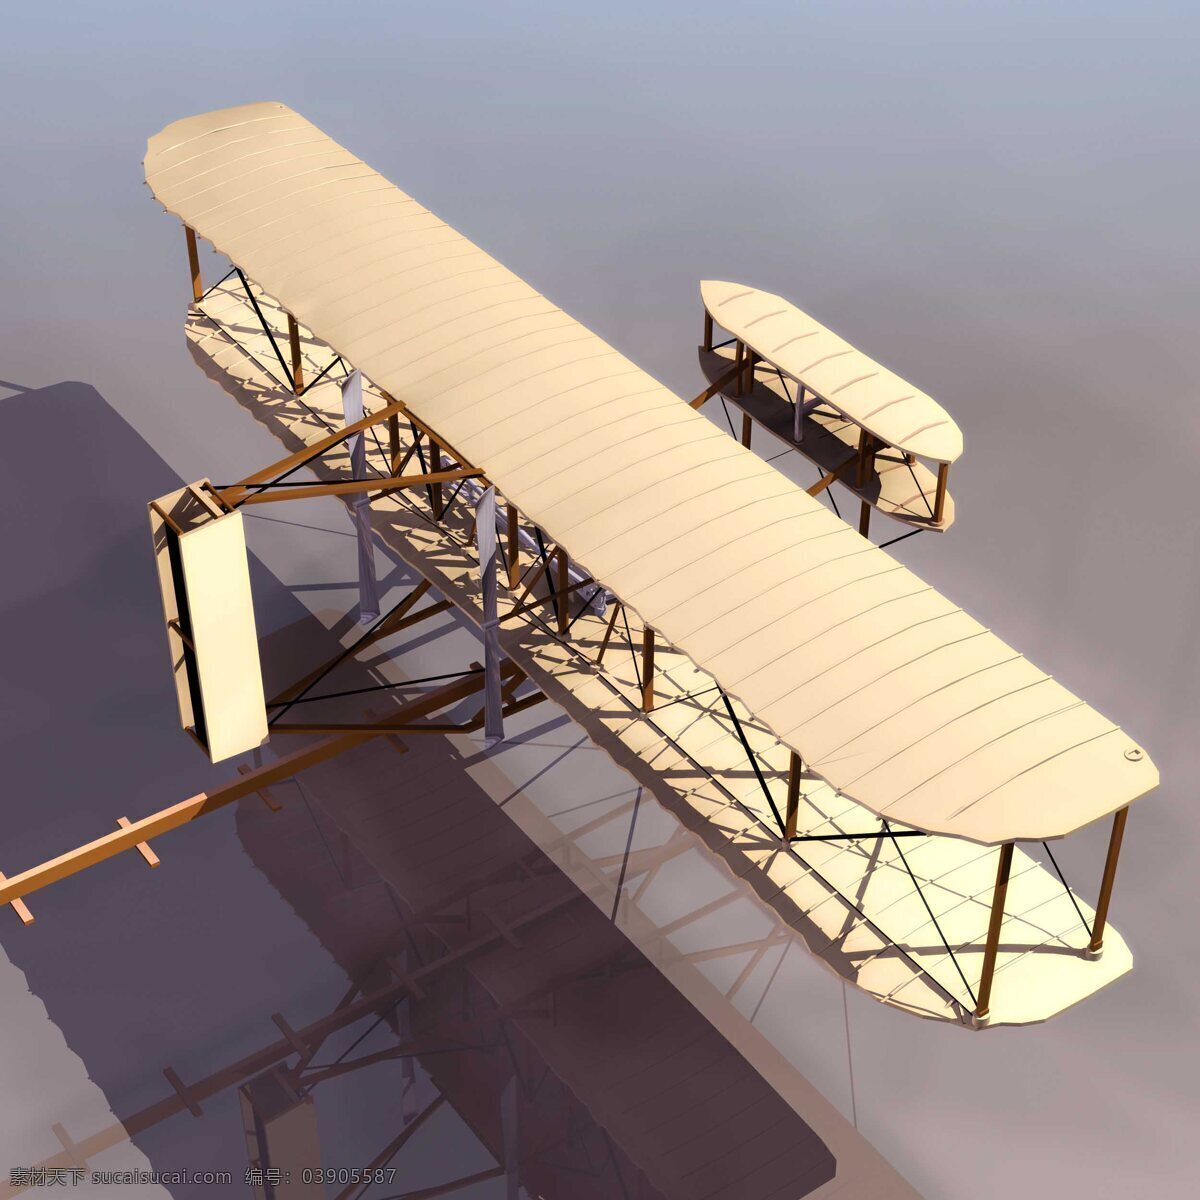 kitty 滑翔机 民用飞机 3d模型素材 电器模型